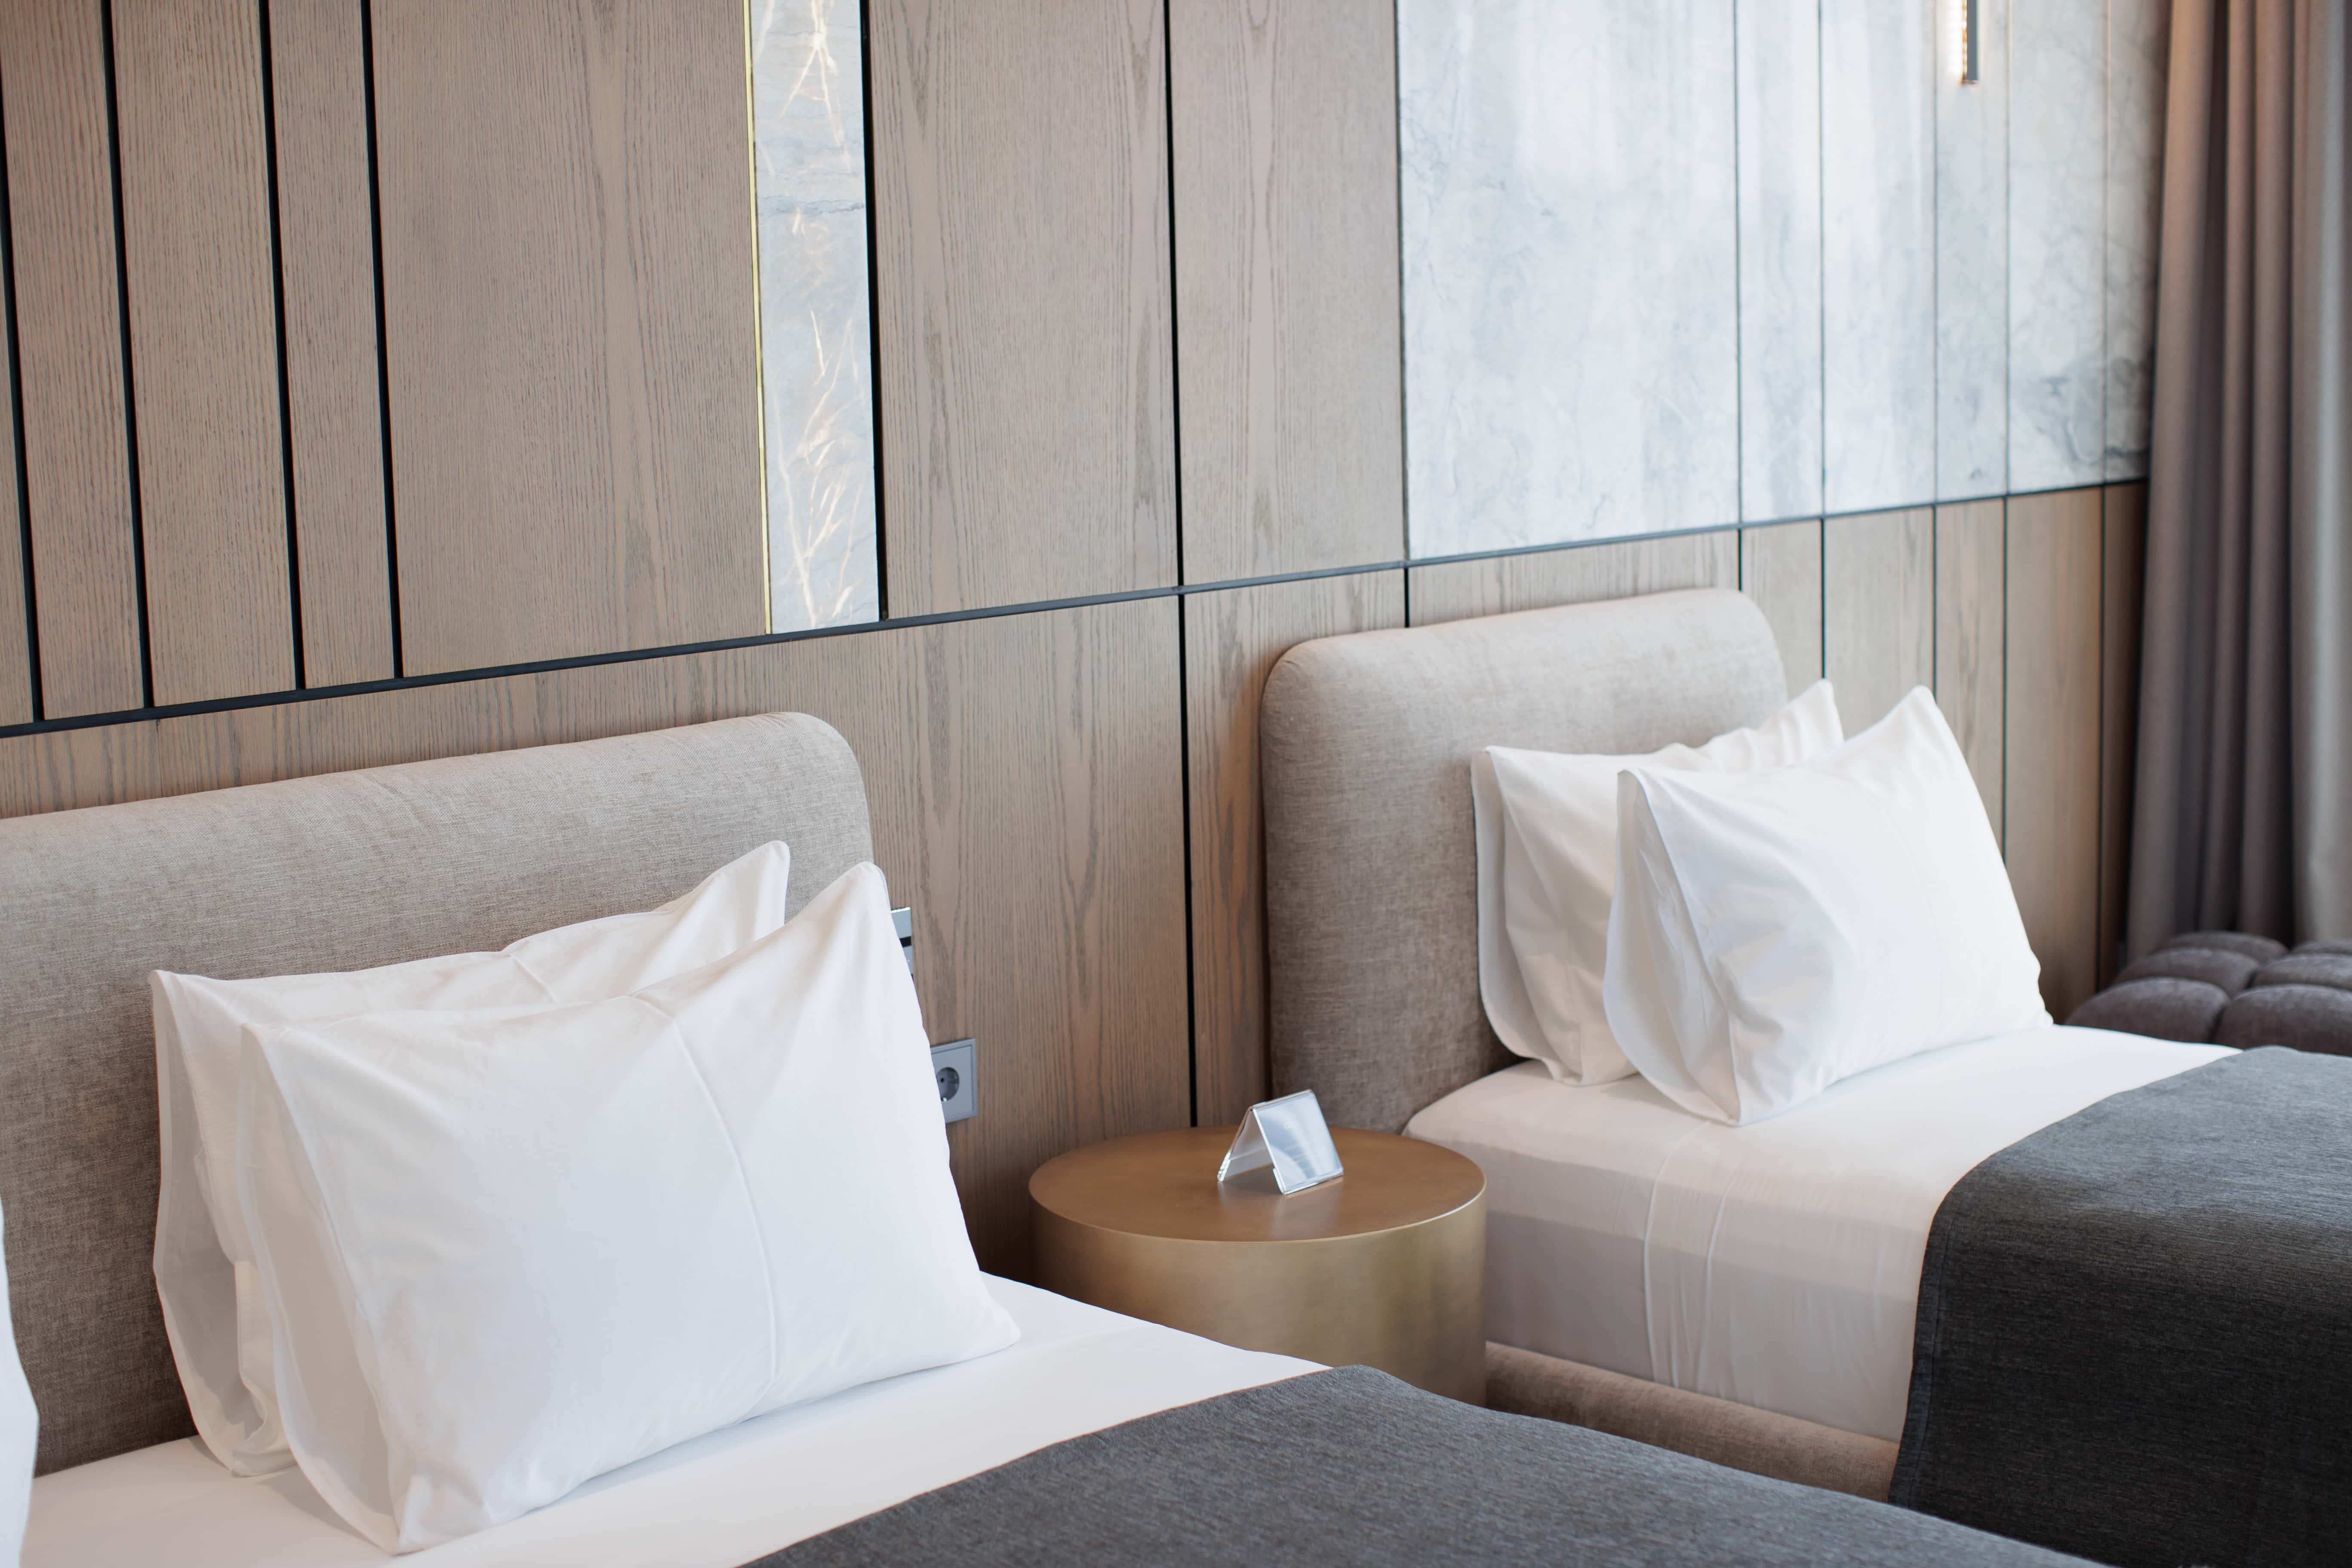 prado_luxury_hotel_room_junior_suite_seaview_jacuzzi_beds_pillows